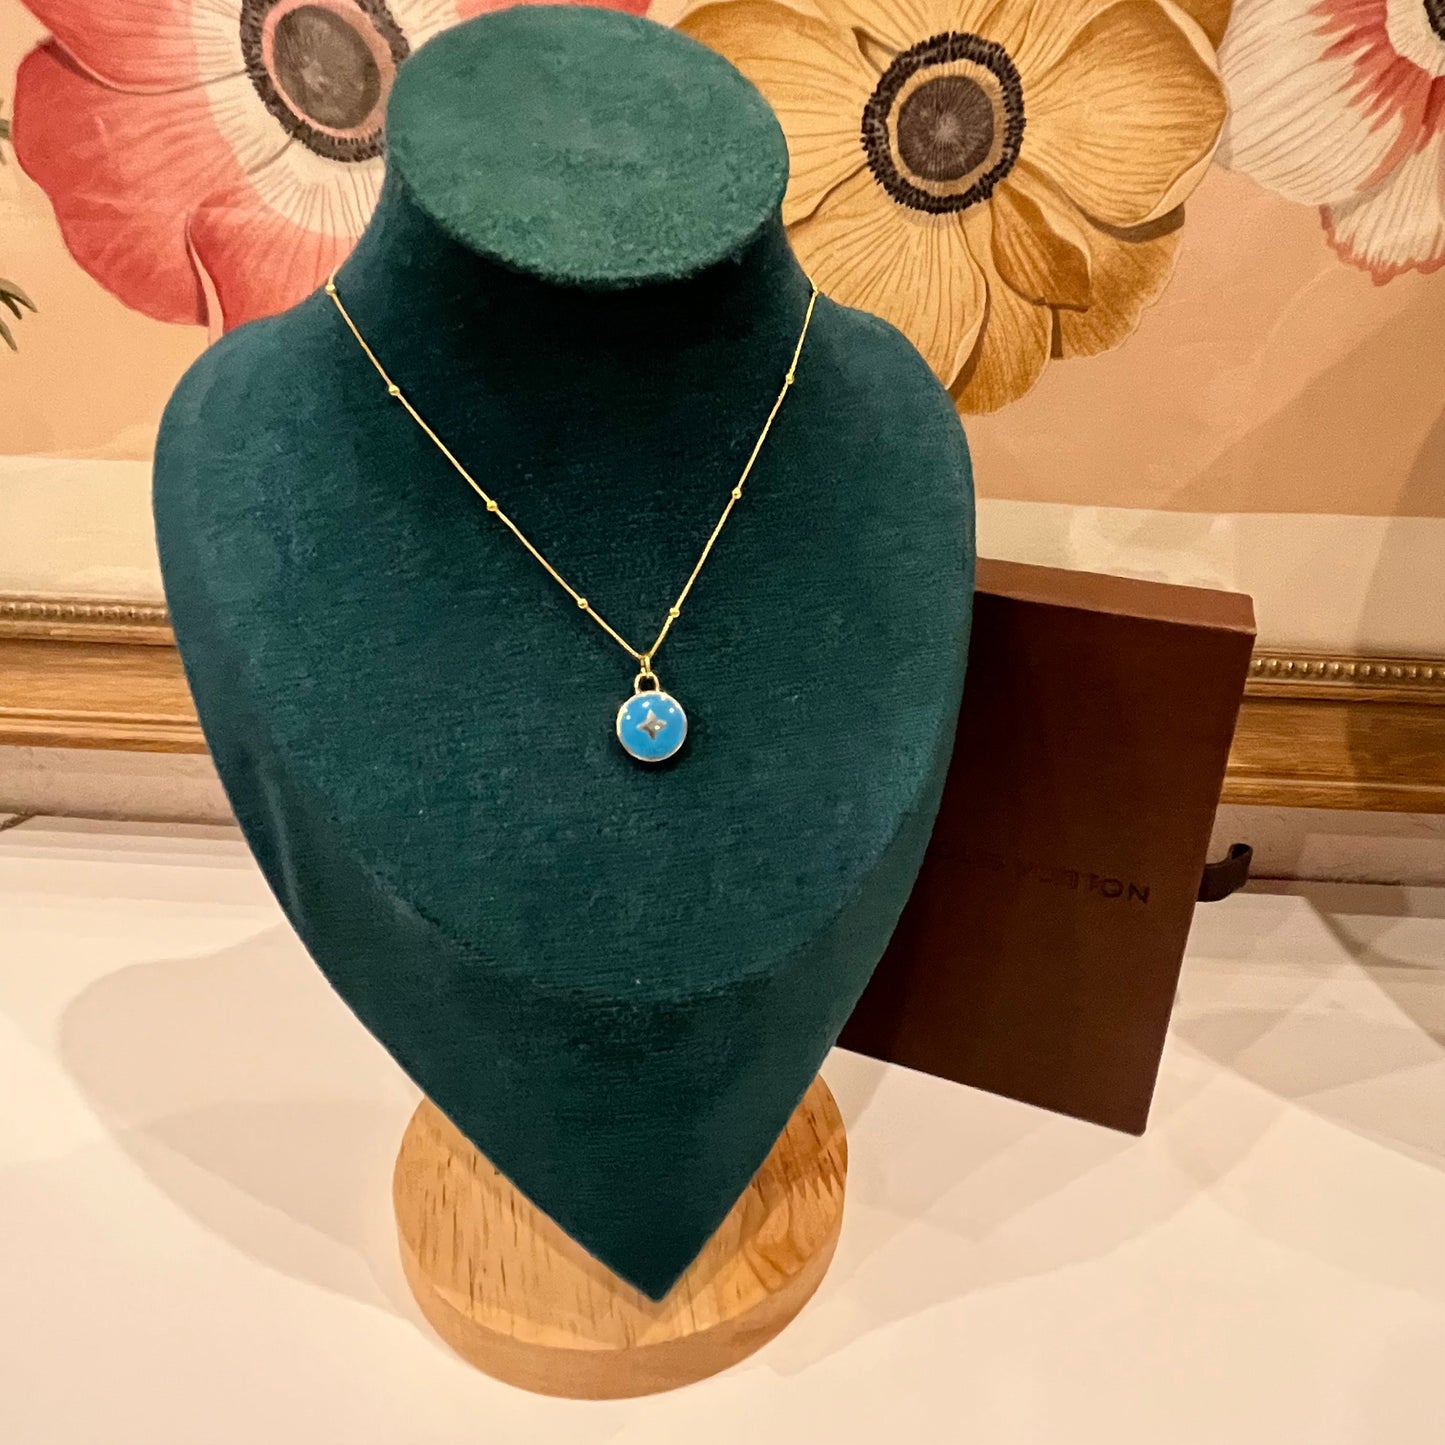 Pastilles LV Logo Louis Vuitton Charm on Necklace - Tiffany Blue